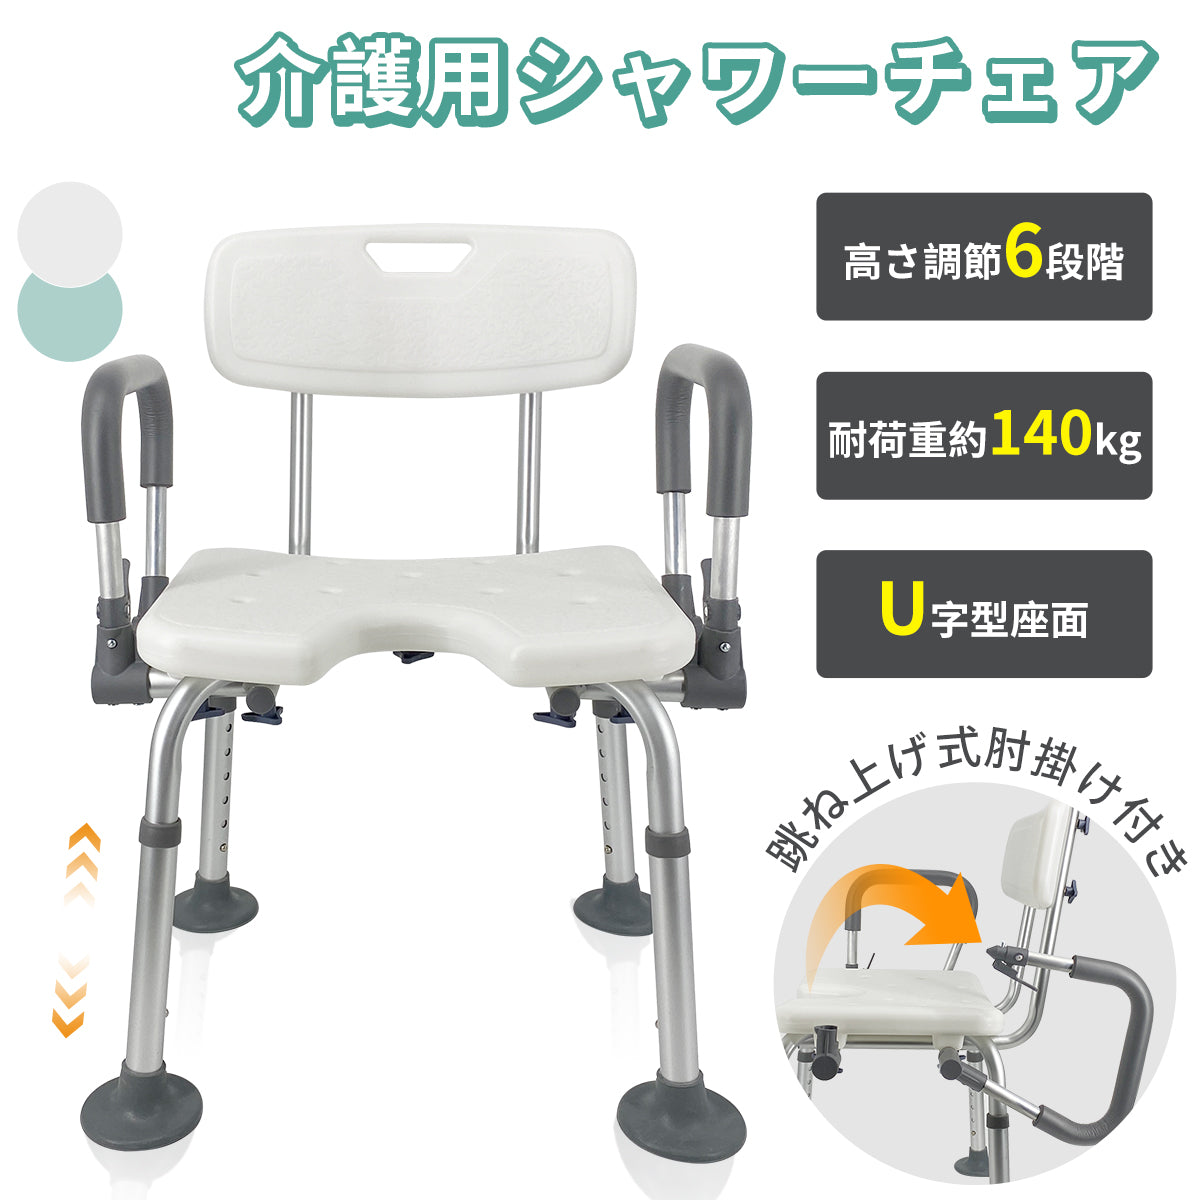 RAKU 介護用シャワーチェア バスチェア 風呂椅子 介護用チェア 